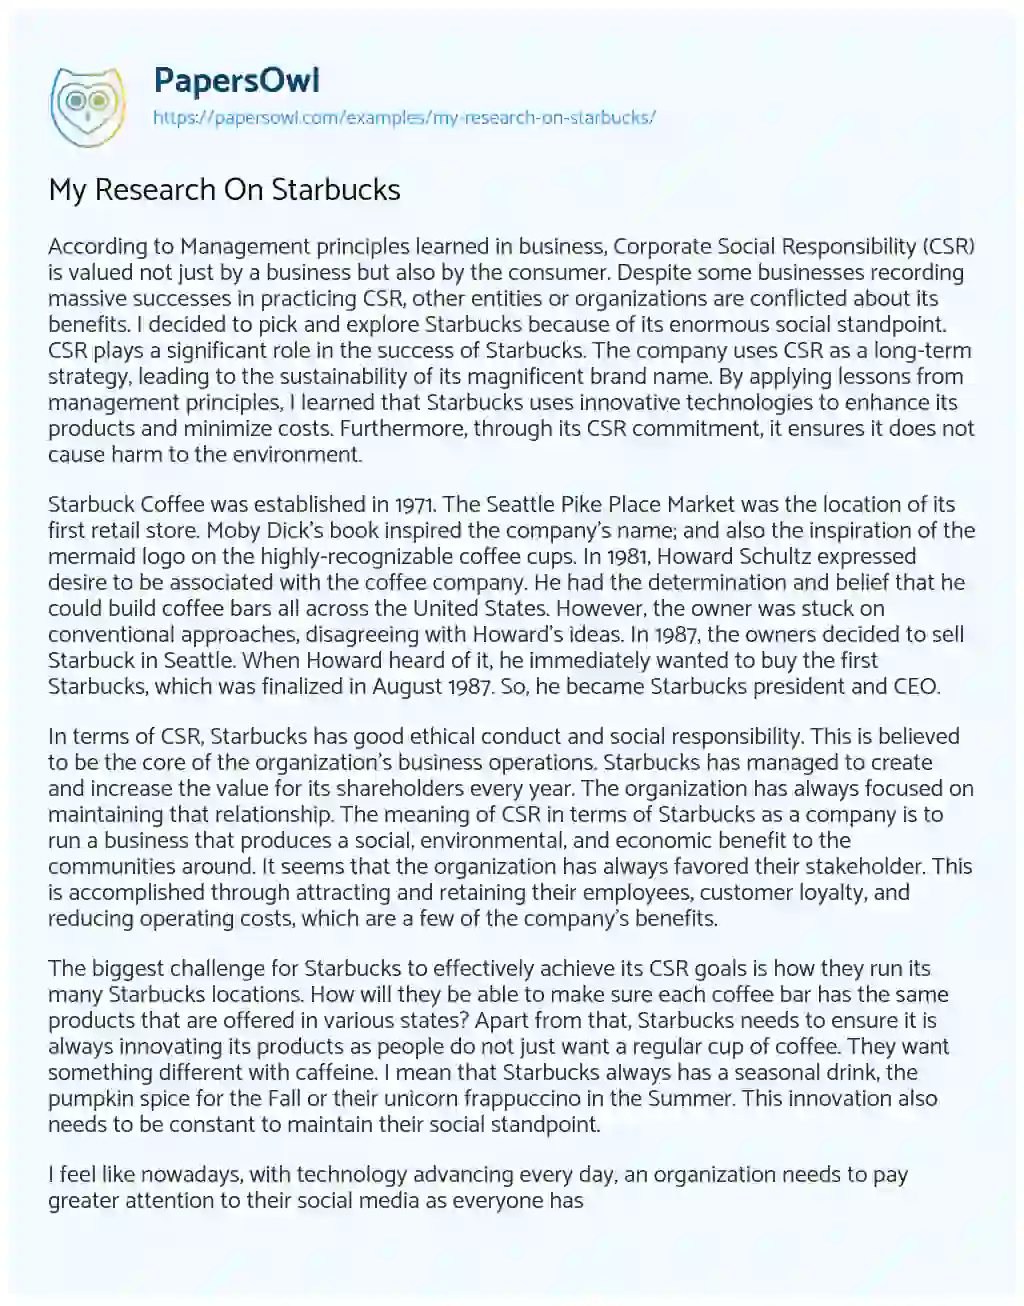 My Research on Starbucks essay